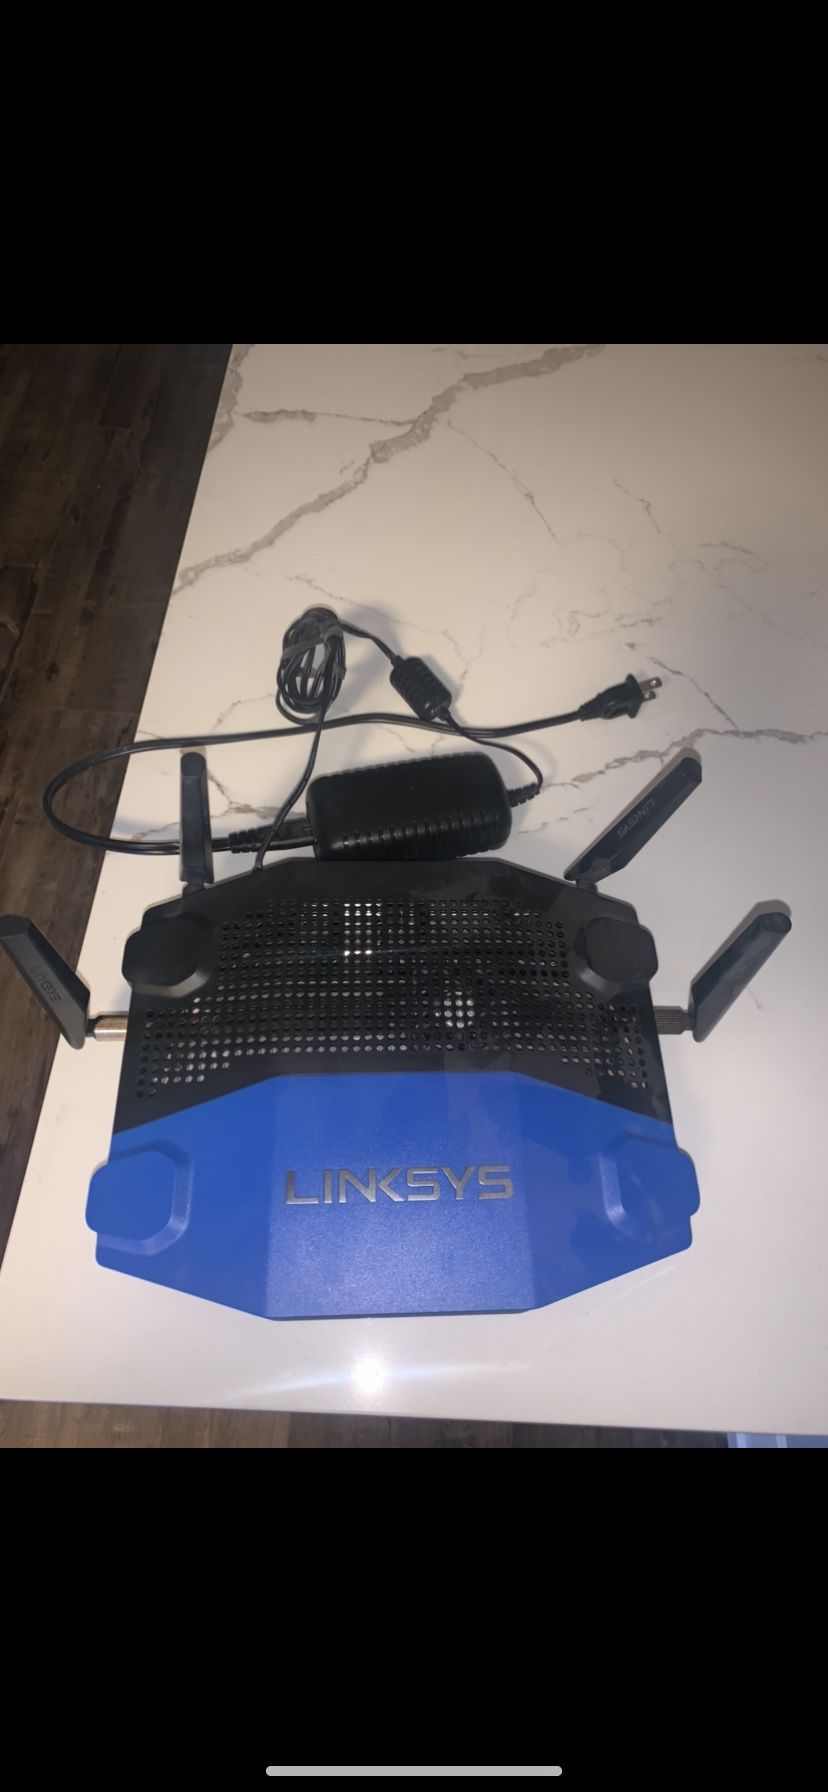 Linksys WRT 1900 AC WiFi router and Motorola Modem